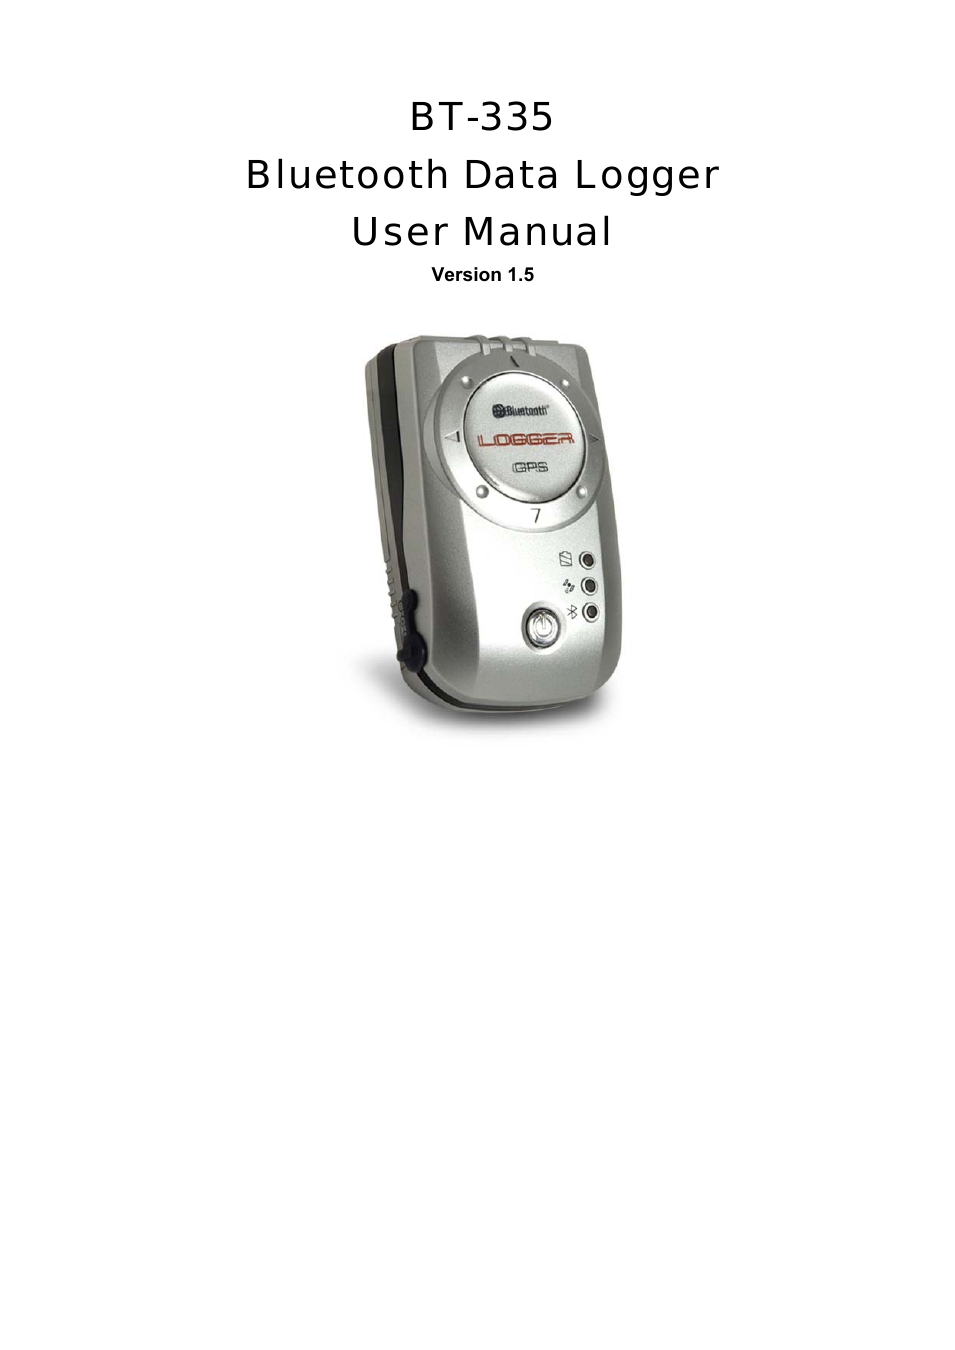 BT-335 User Manual